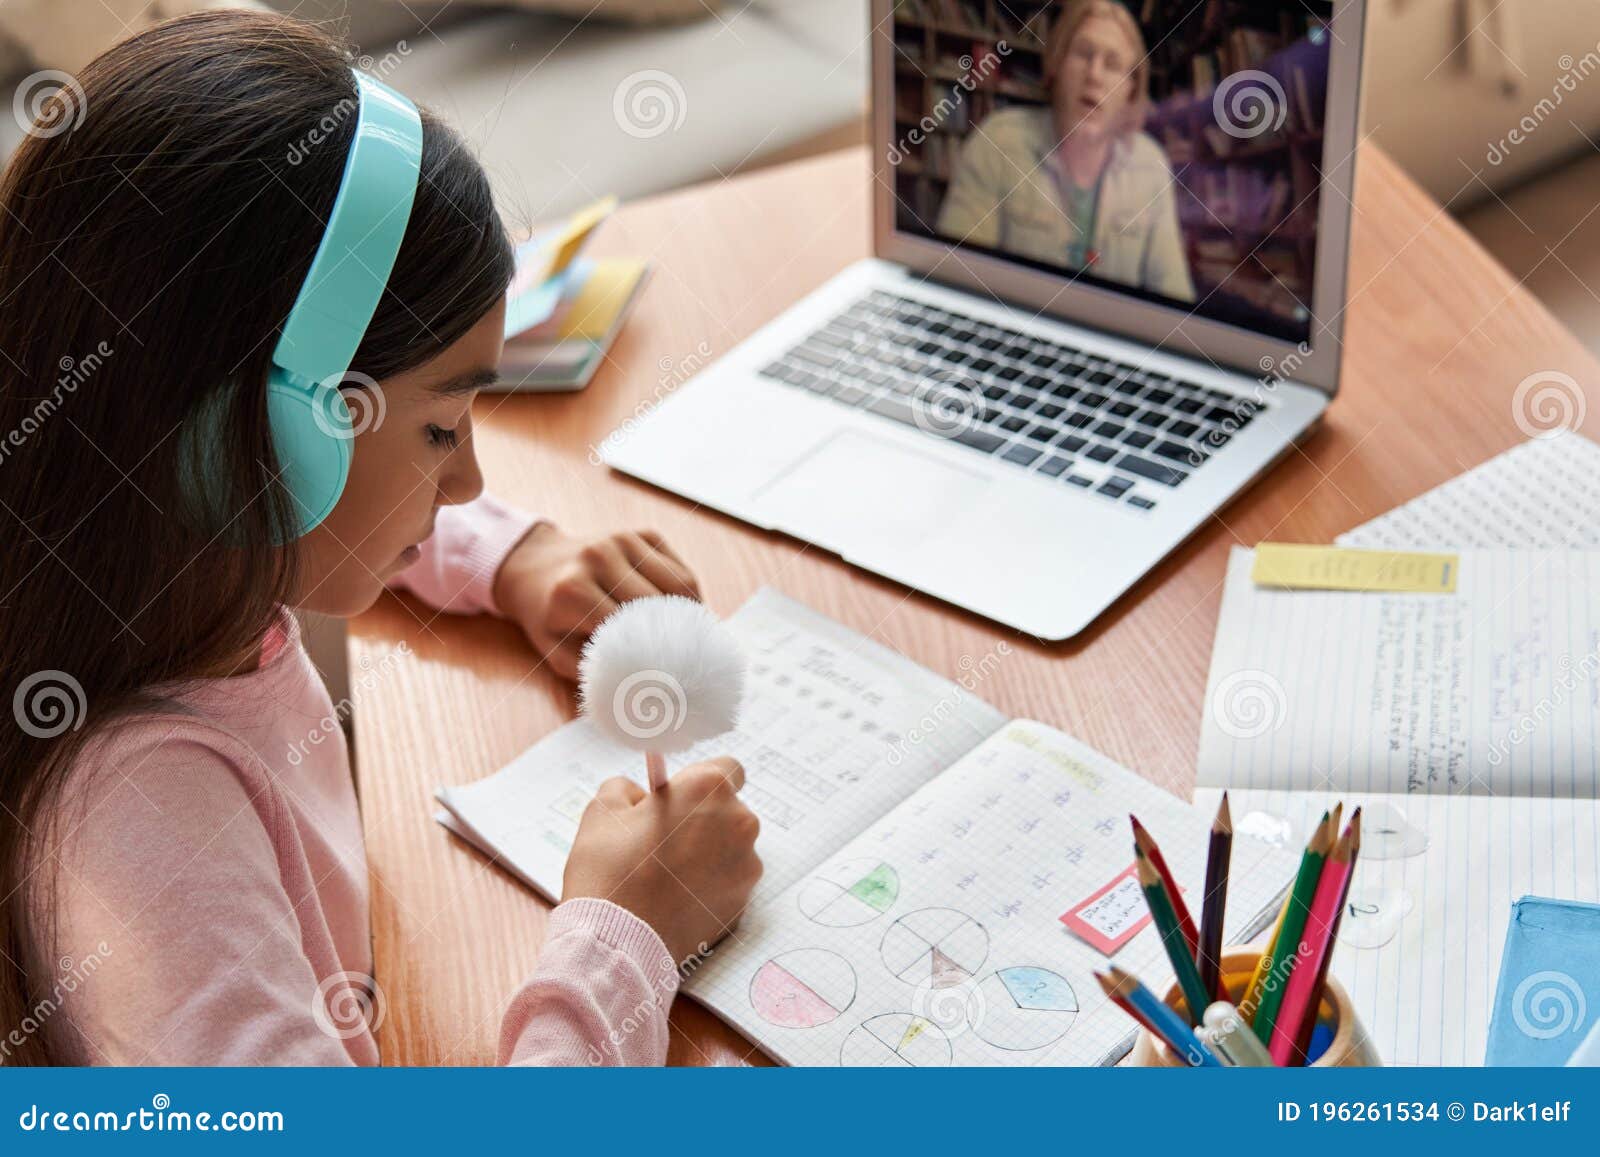 Indian School Girl Learn Online Video Calling Math Teacher, Over Shoulder.  Stock Photo - Image of headphone, learn: 196261534